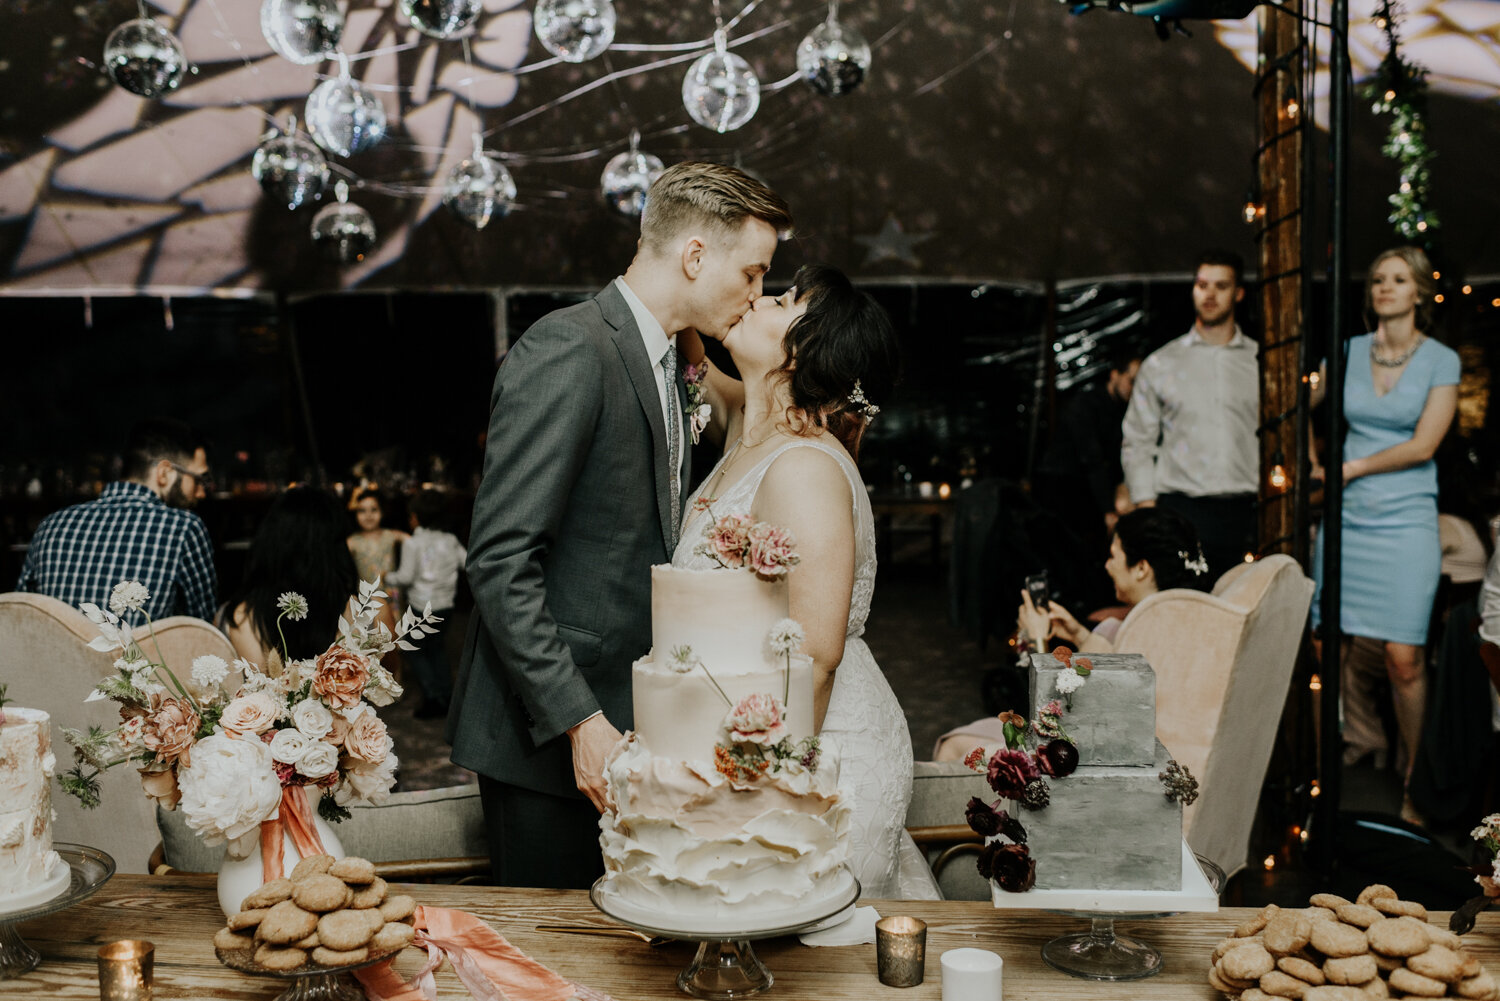 Cake Cutting Wedding Reception Traditions in Austin, Texas